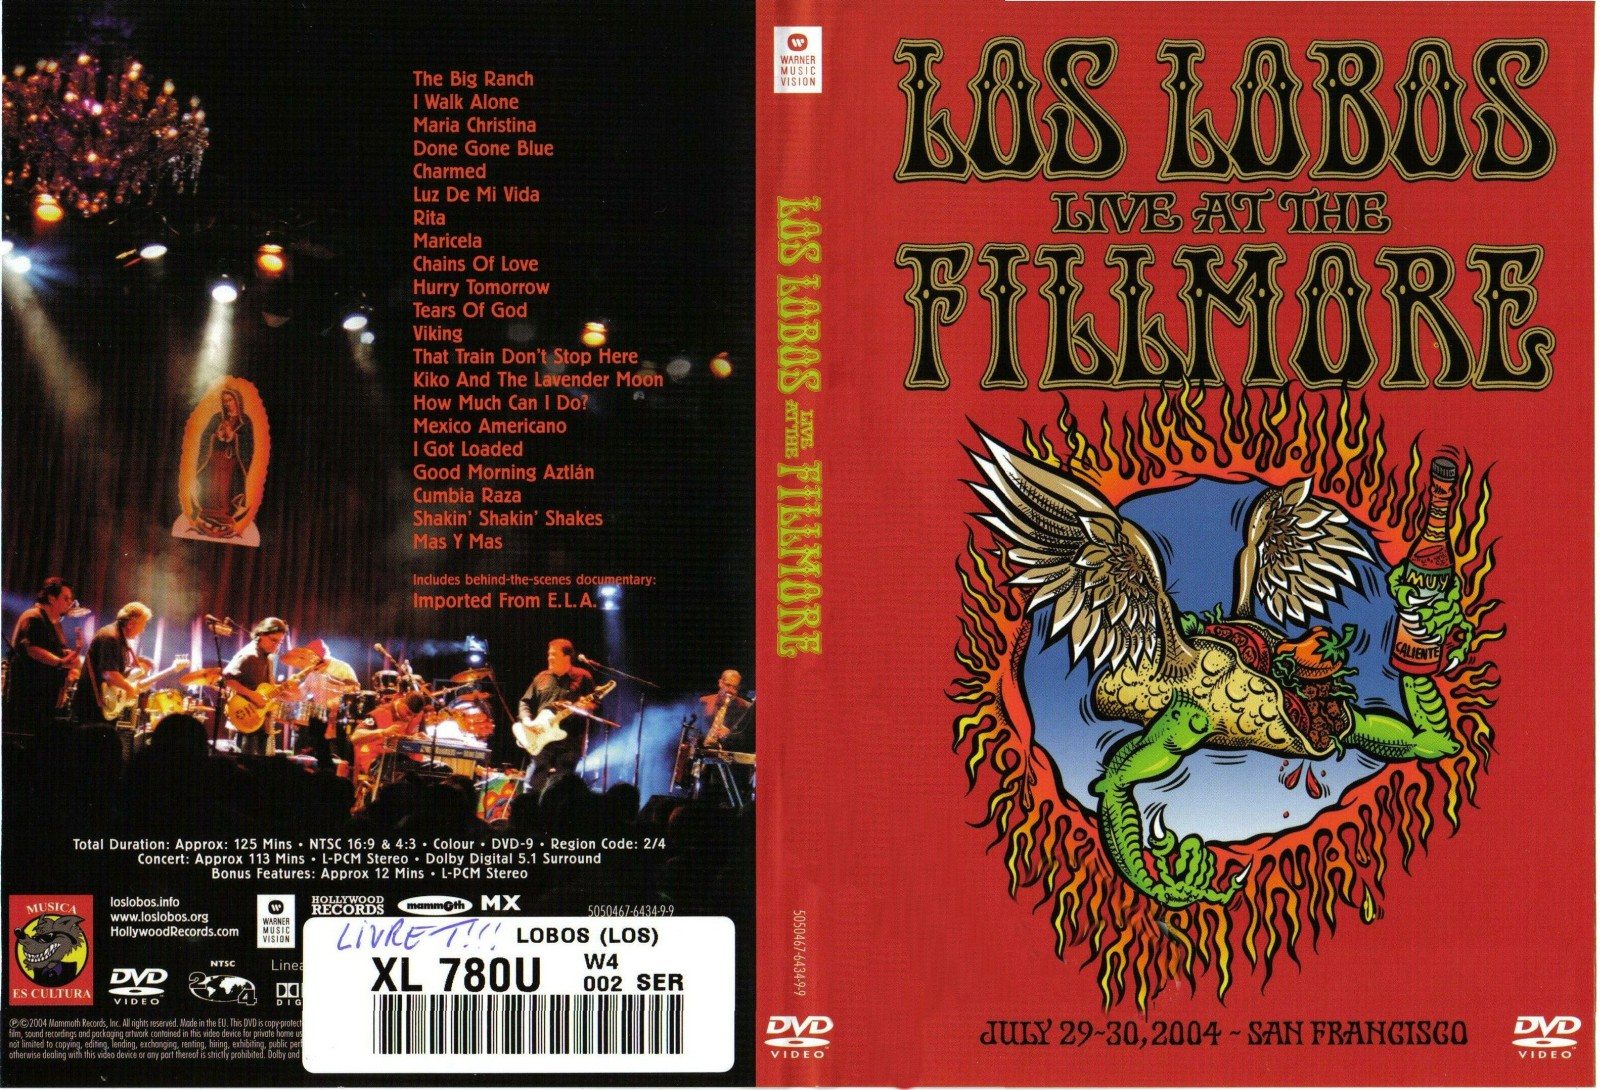 Jaquette DVD Los Lobos - live at the fillmore